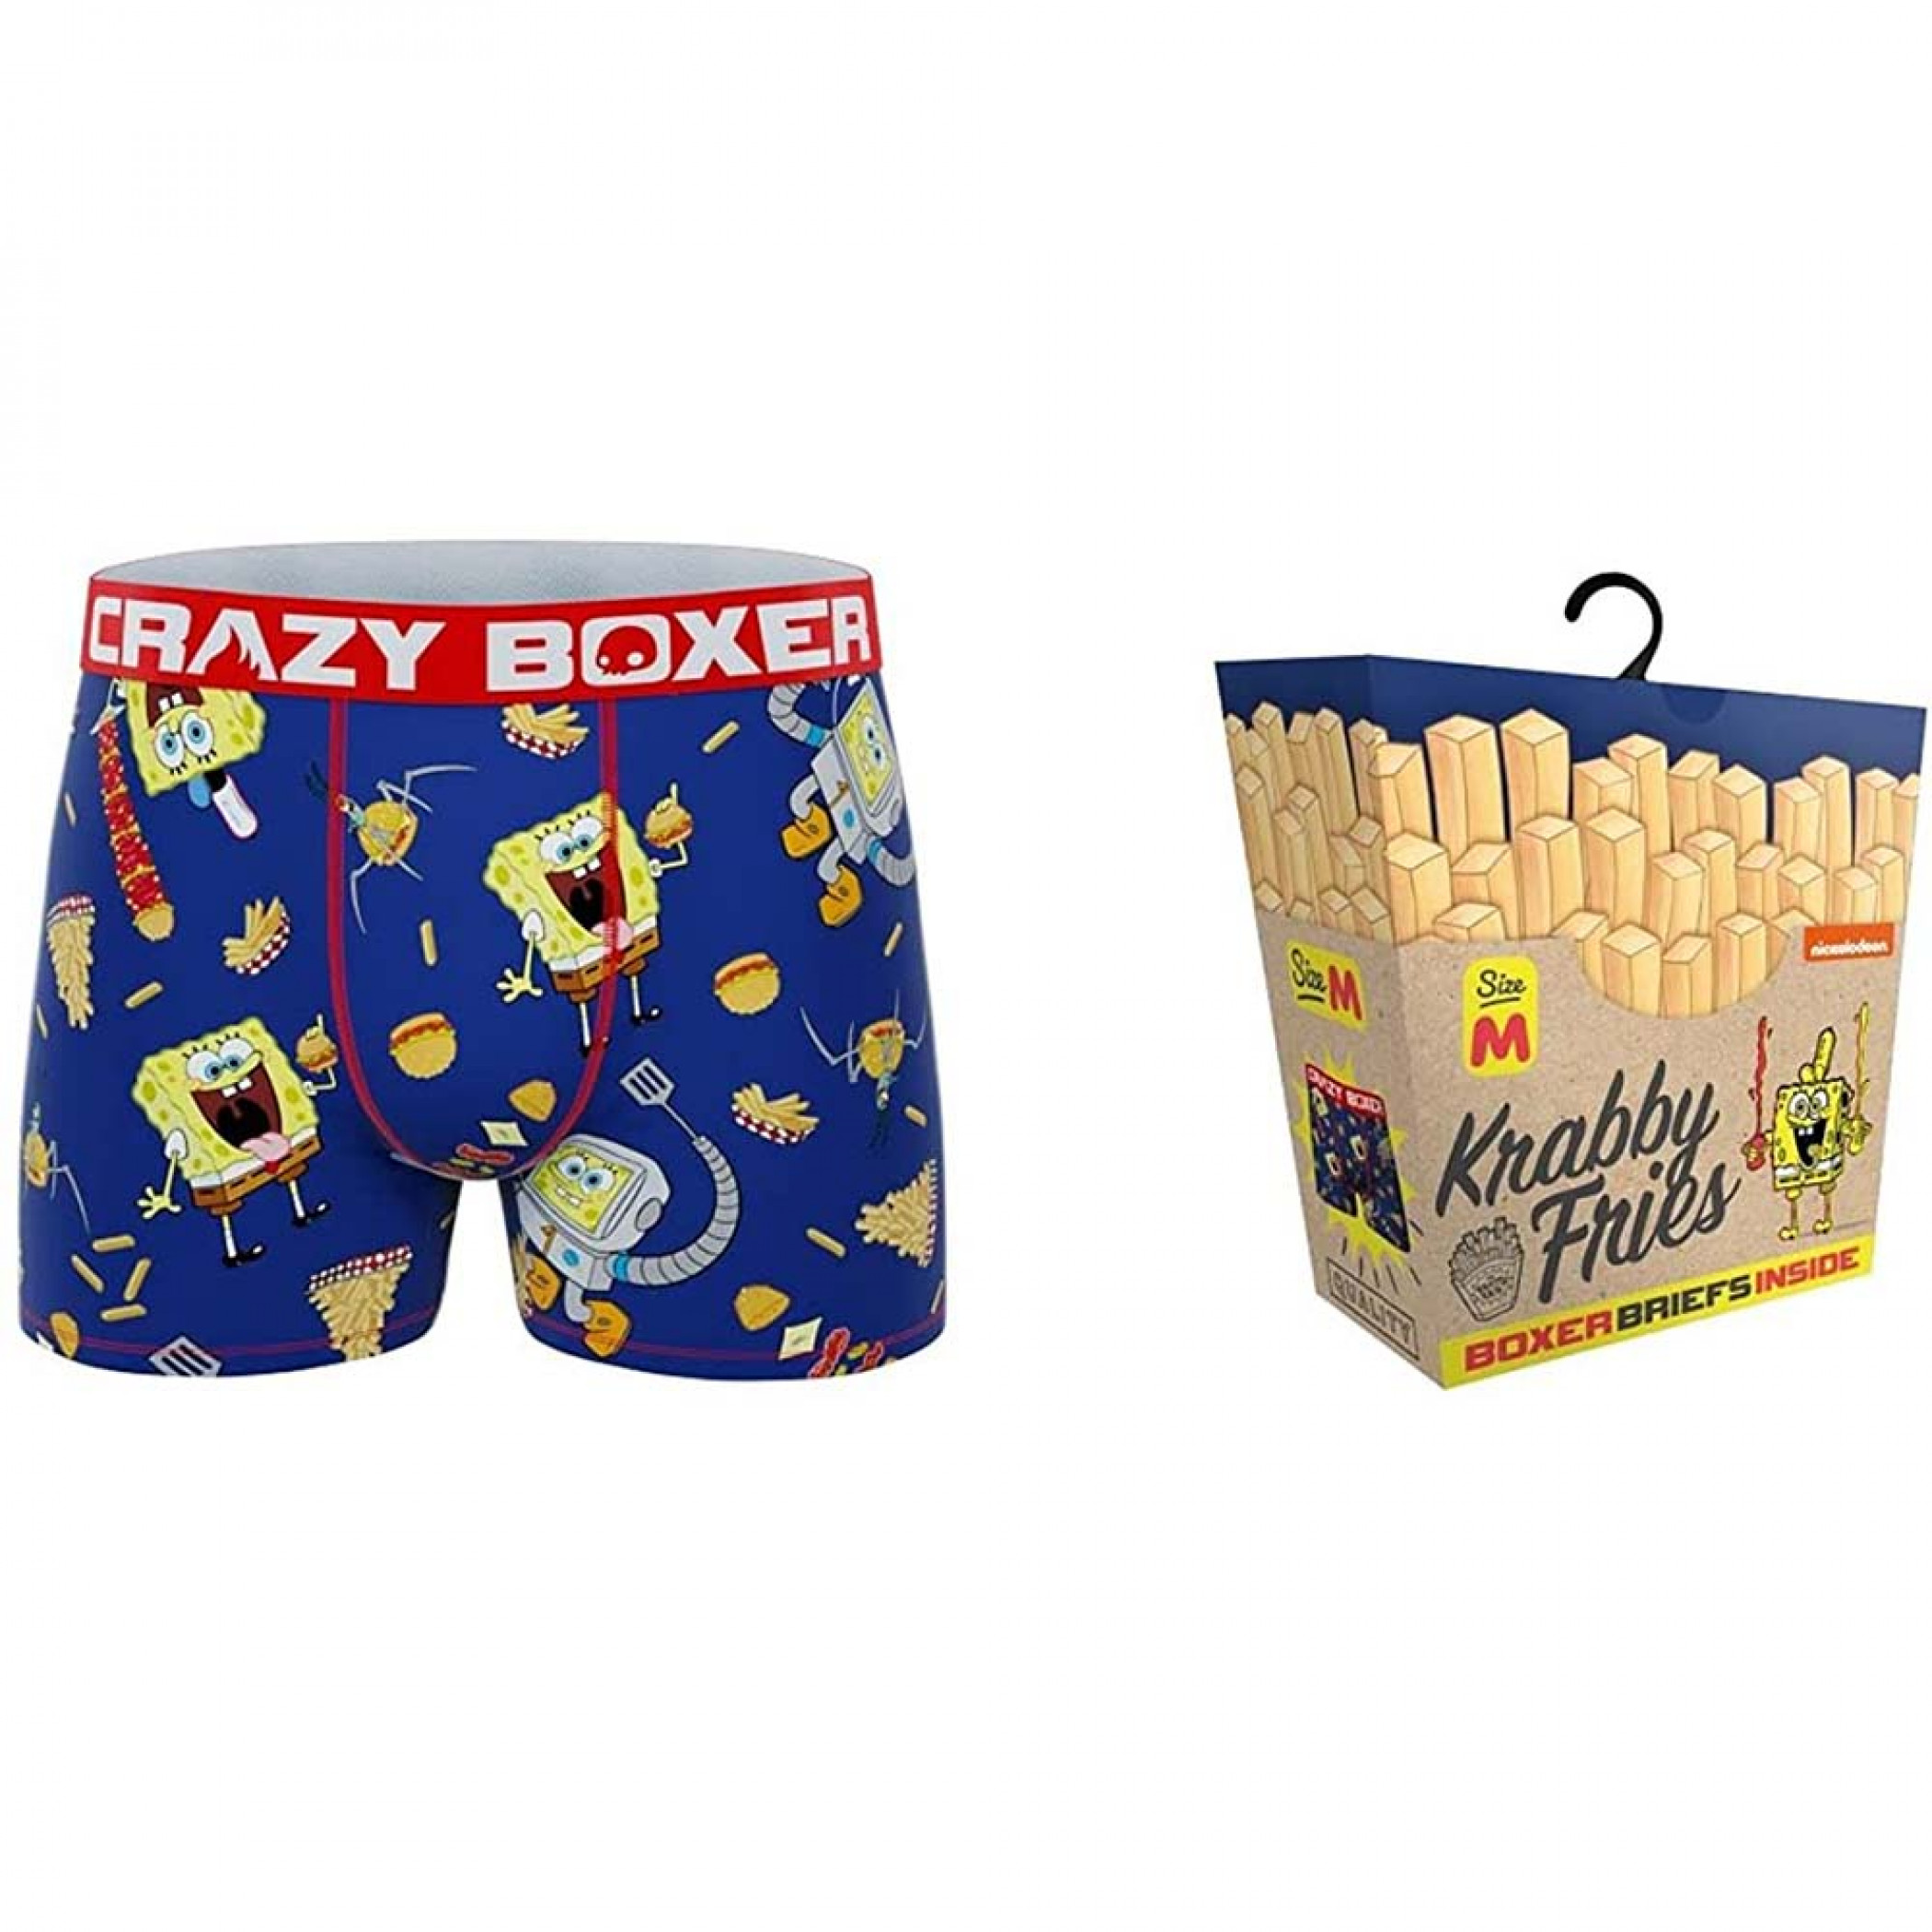 Crazy Boxer SpongeBob SquarePants Boxer Briefs in Pizza Box